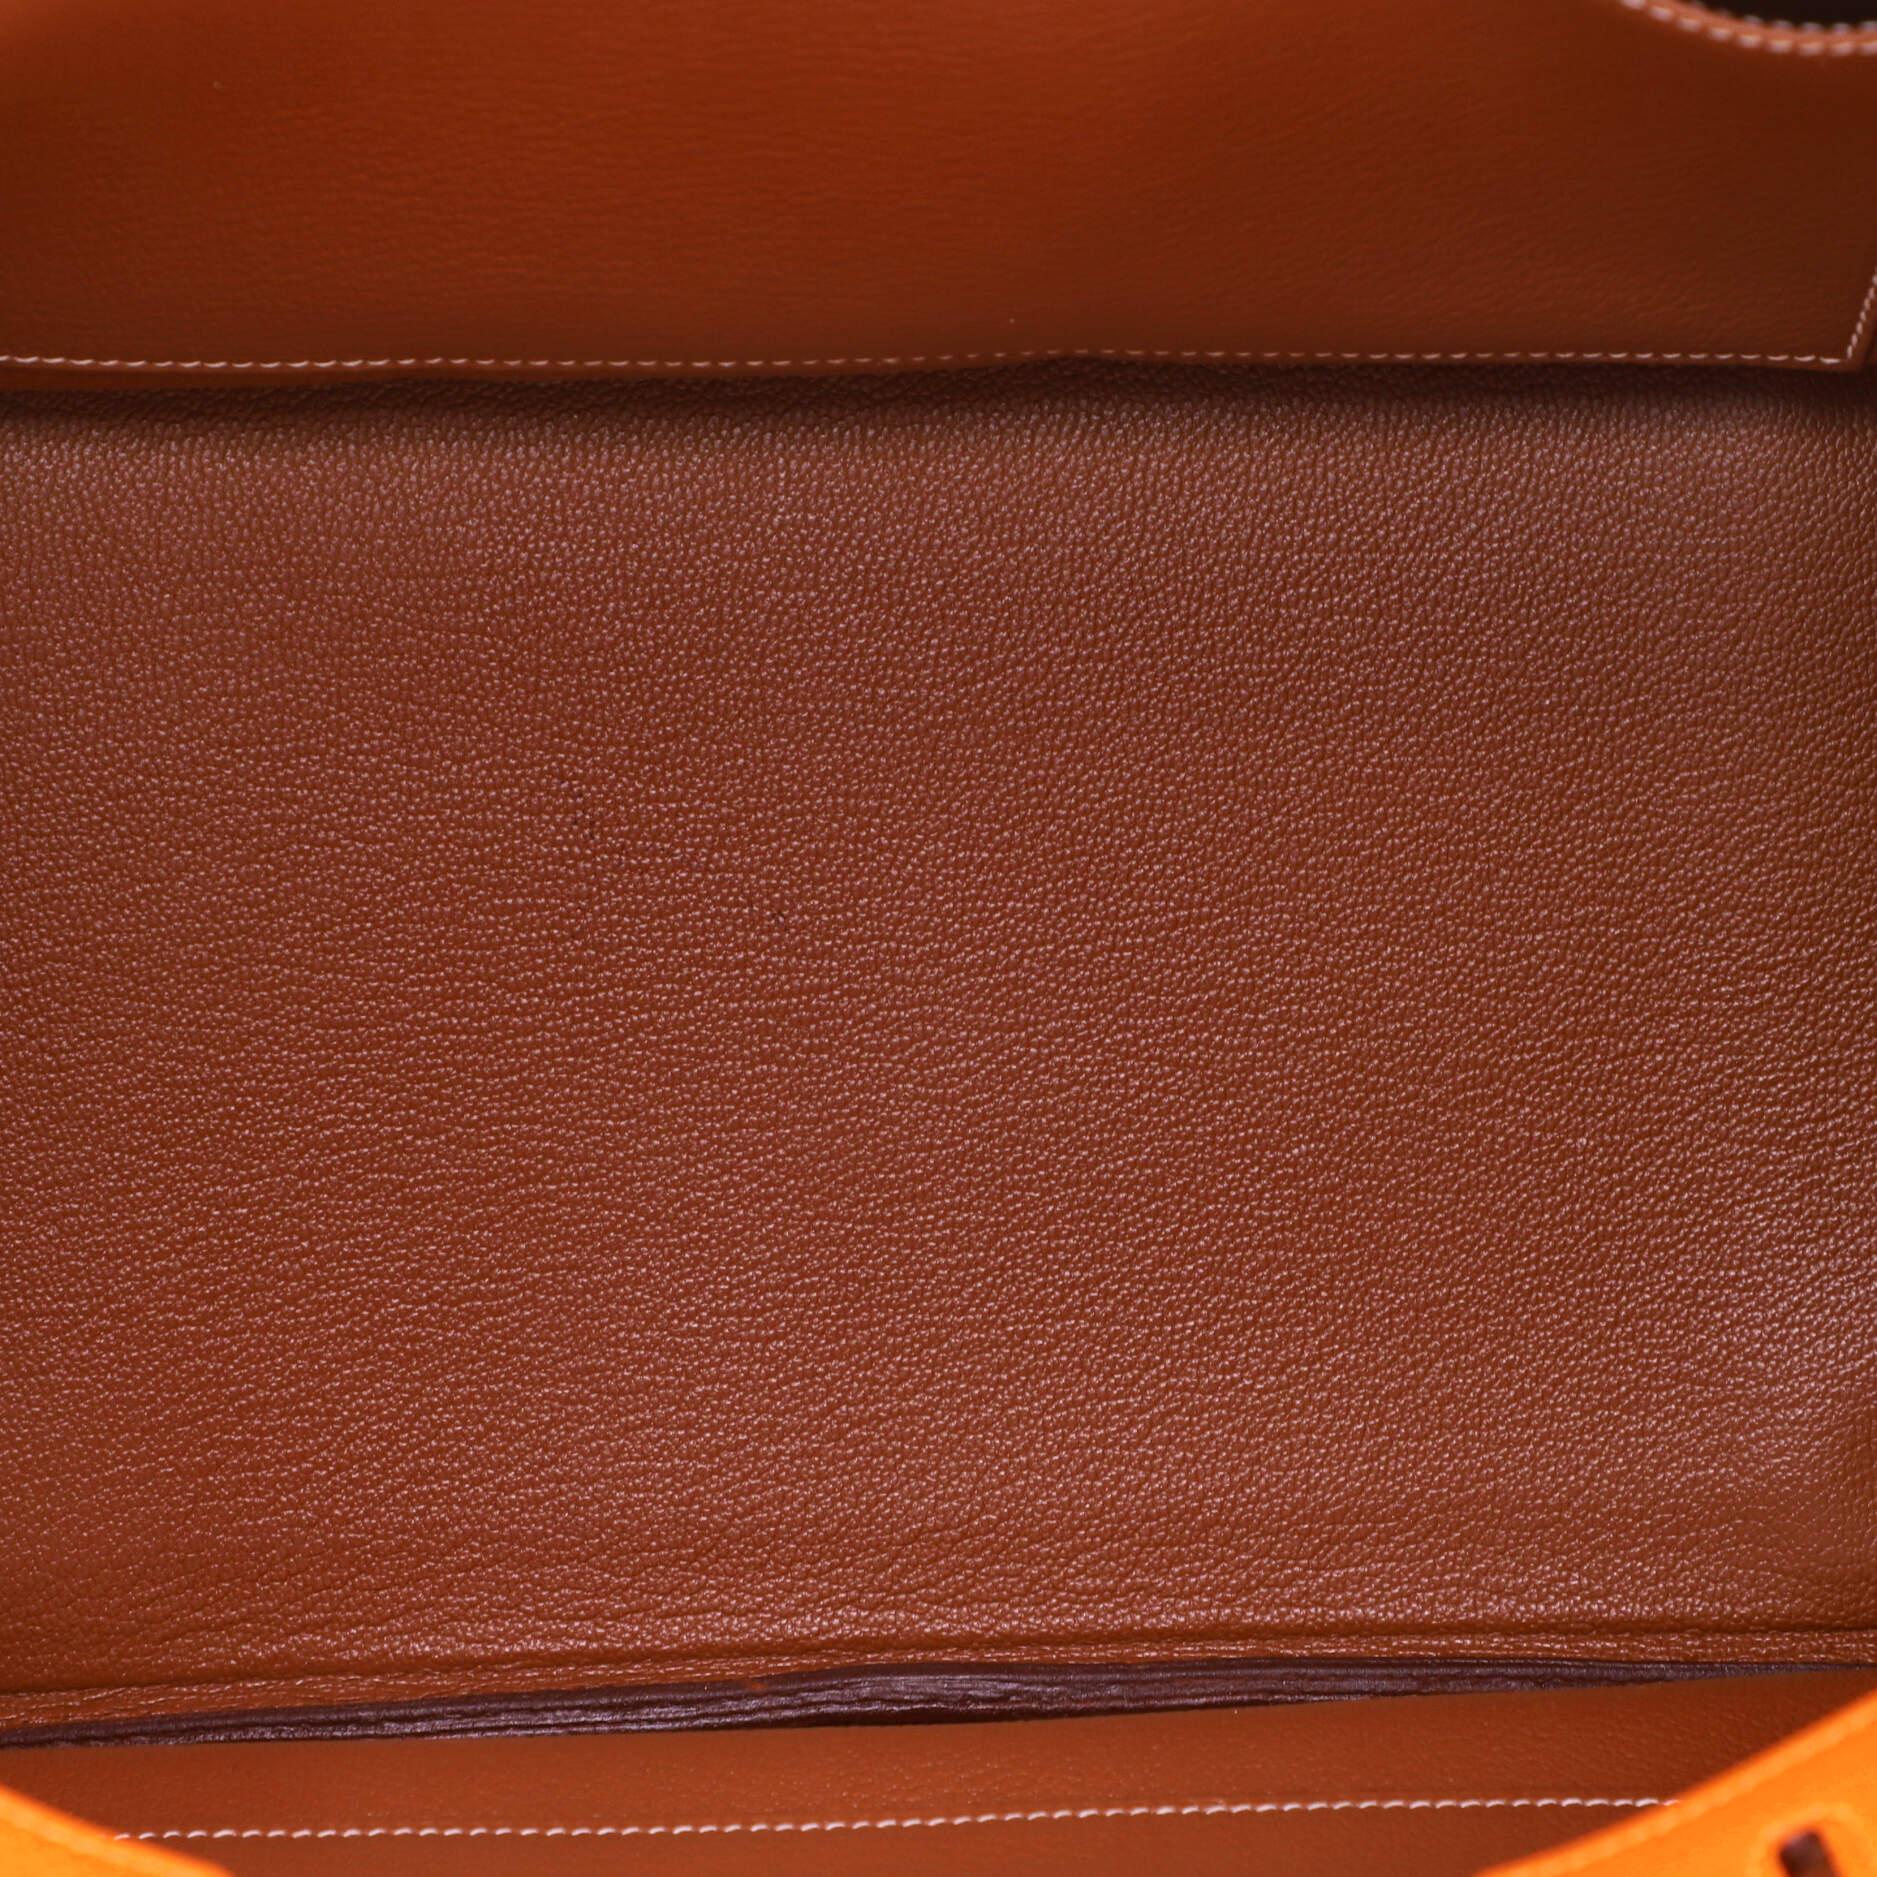 Orange Hermes Birkin Handbag Bicolor Togo with Ruthenium Hardware 35